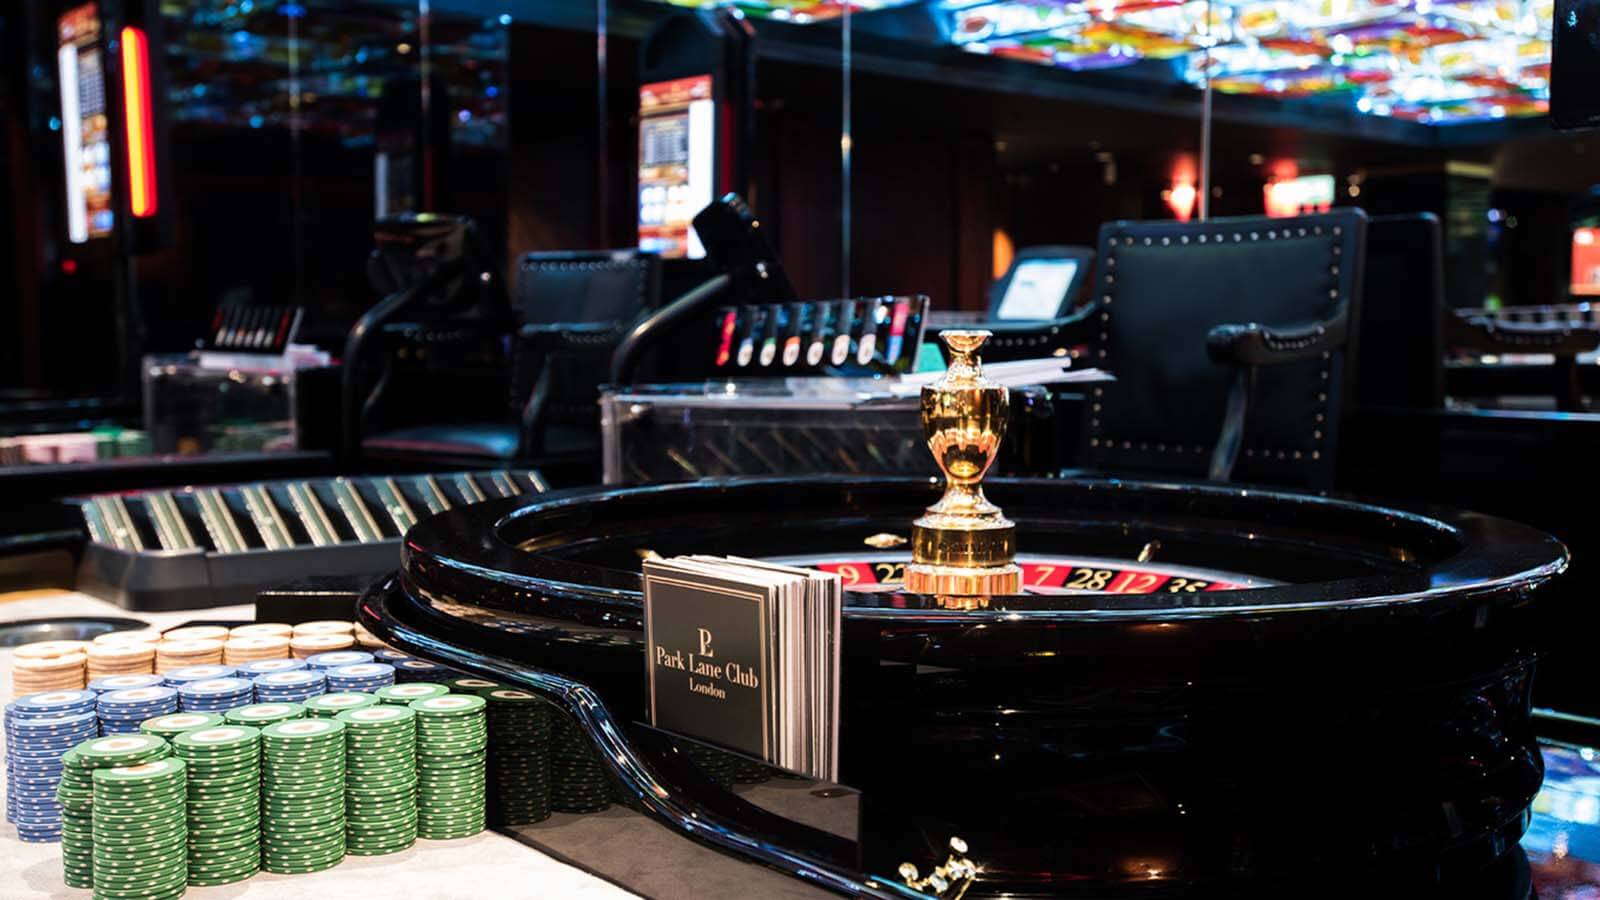 #5. Park Lane Casino – best casino in London for customer service